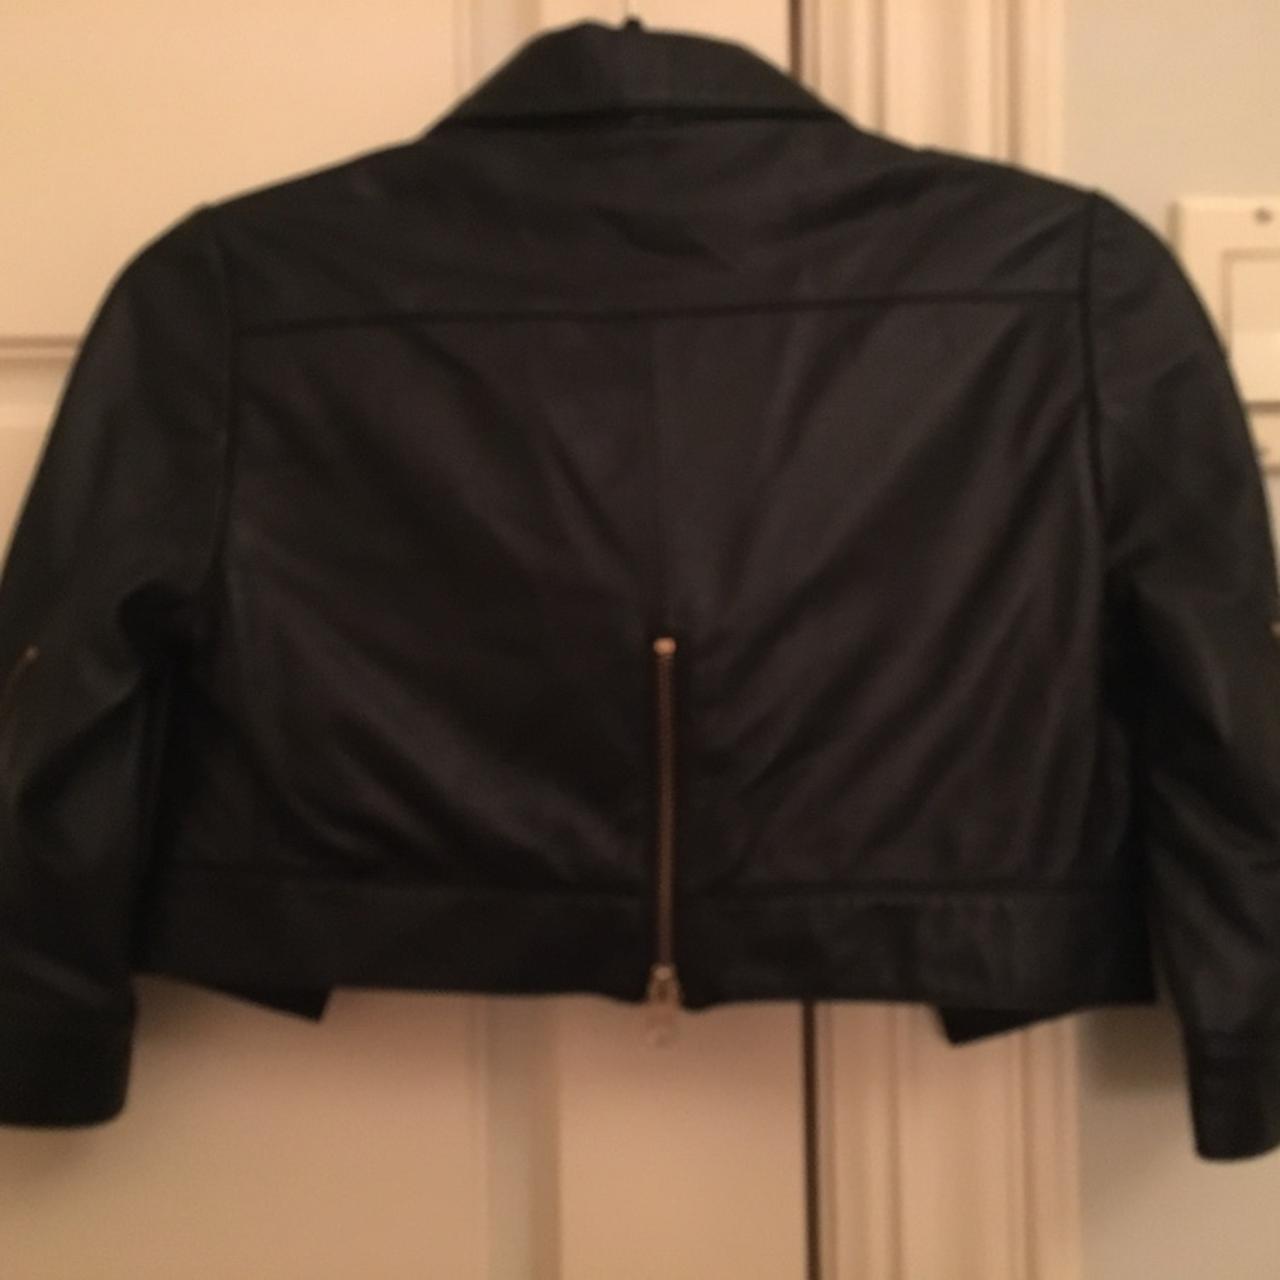 Product Image 3 - Leather cropped jacket fits like